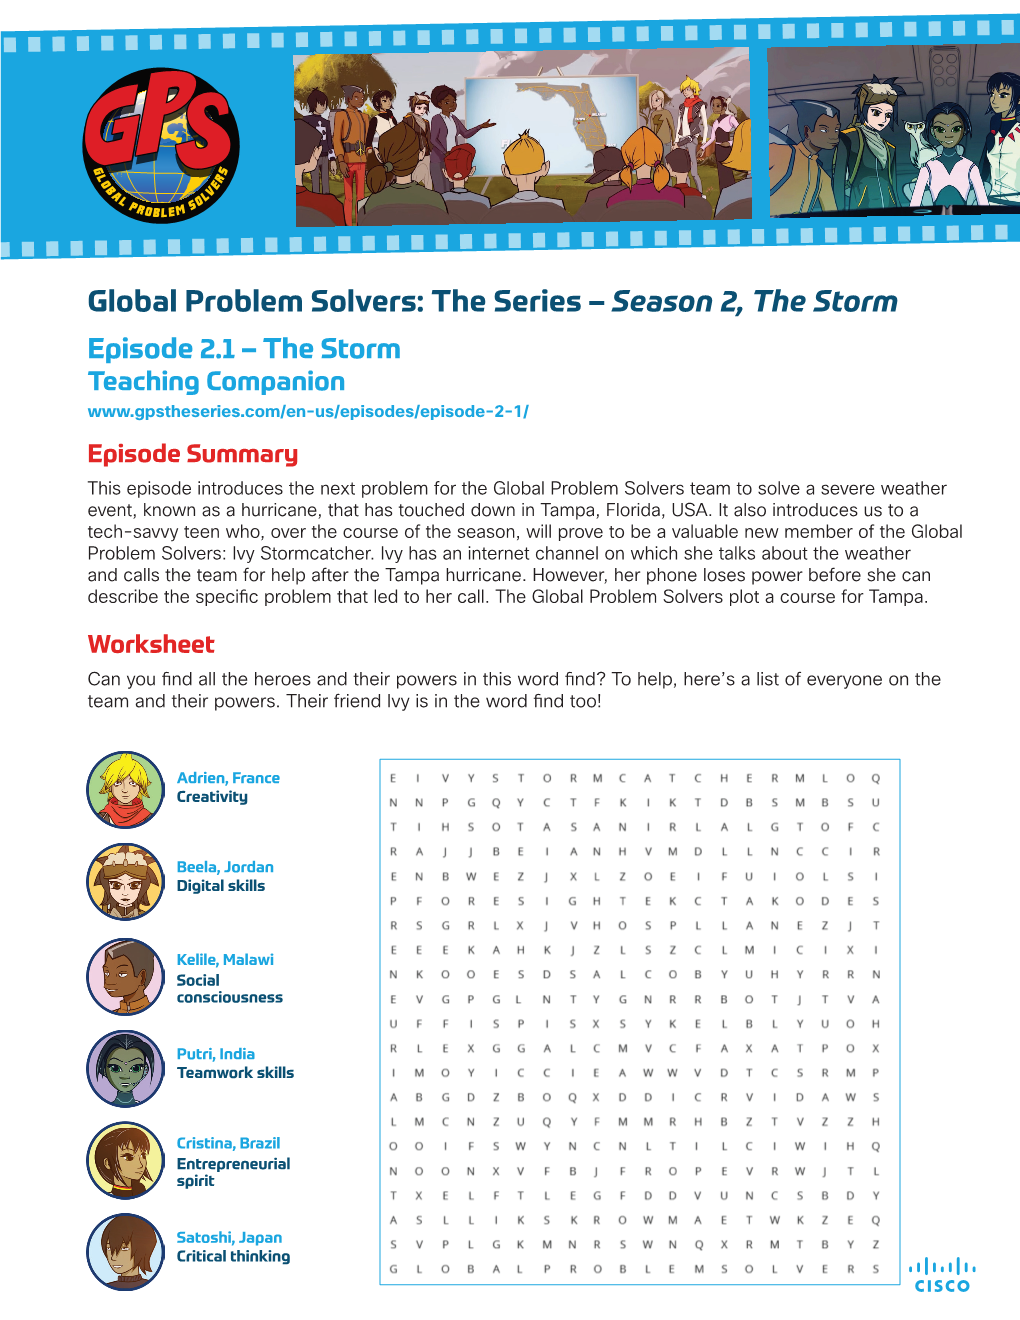 The Series – Season 2, the Storm